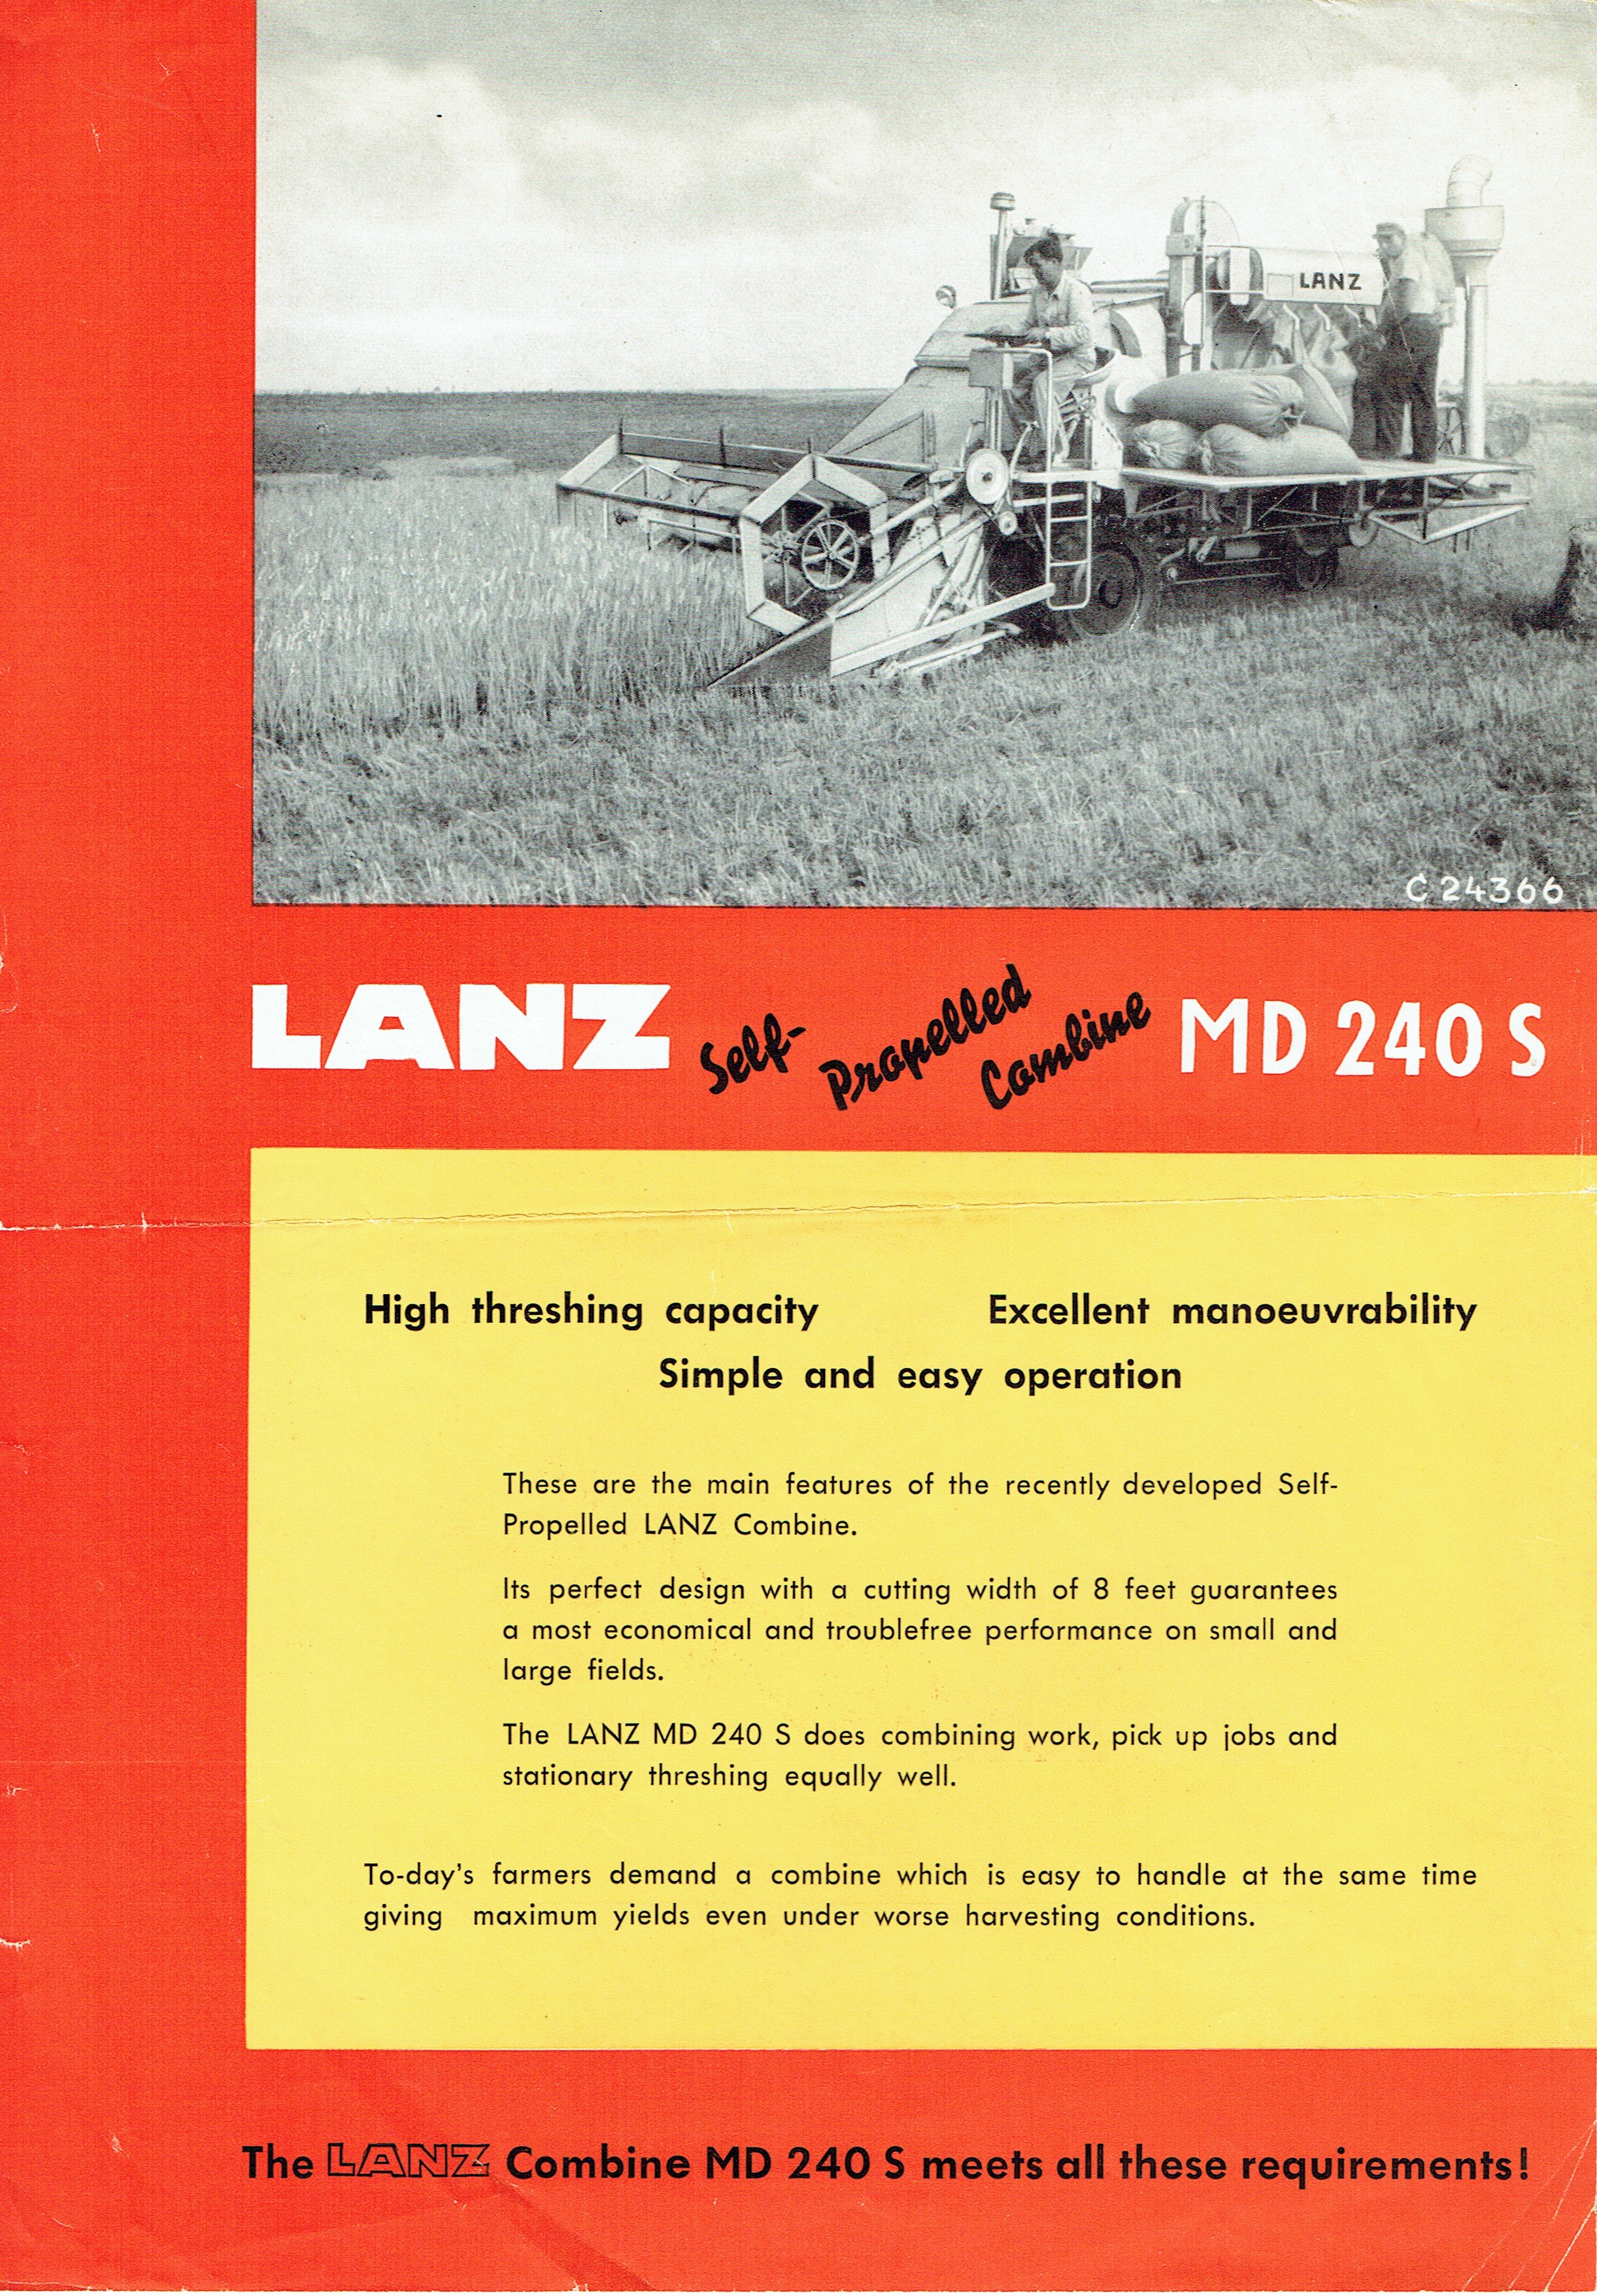 LANZ MD240S (Mähdrescherarchiv Kühnstetter CC BY-NC-SA)